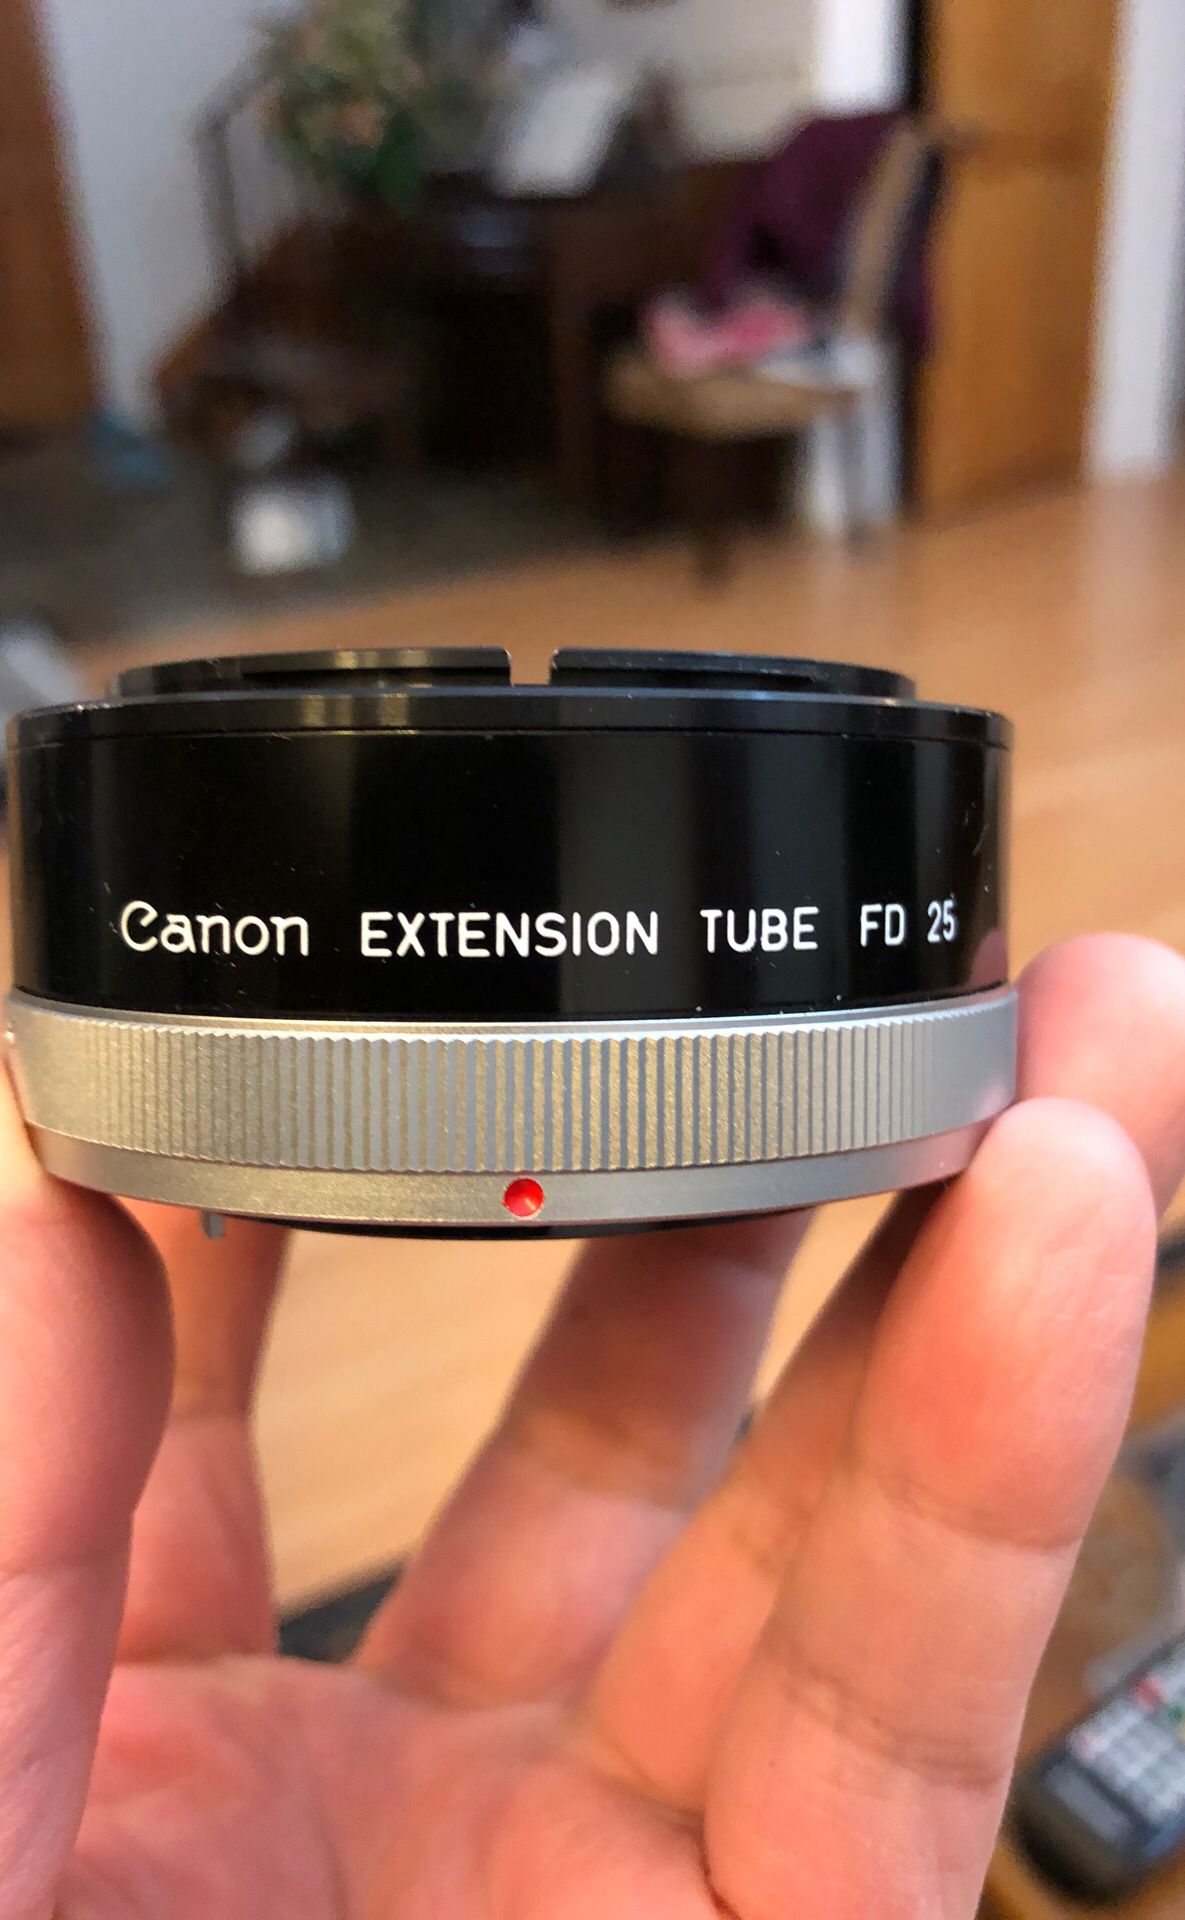 Canon extension tube FD 25